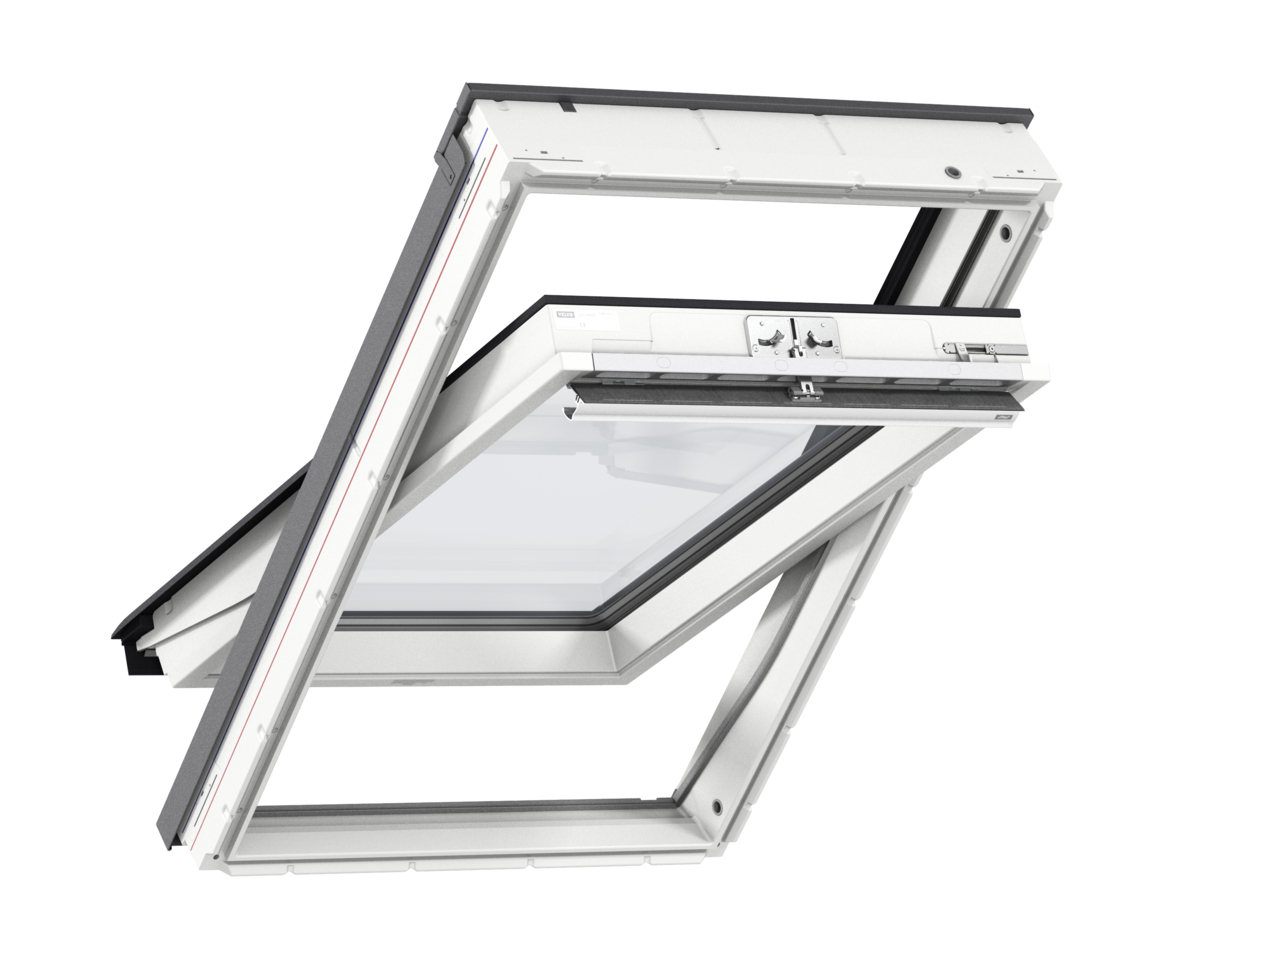 Мансардное двухкамерное белое окно Velux (Велюкс) GLU PK08 0061 94х140 см (ручка сверху), Деревянное мансардное окно в полиуретане с двухкамерным стеклопакетом GLU 0061 PK08 Окно 94*140 см, Velux